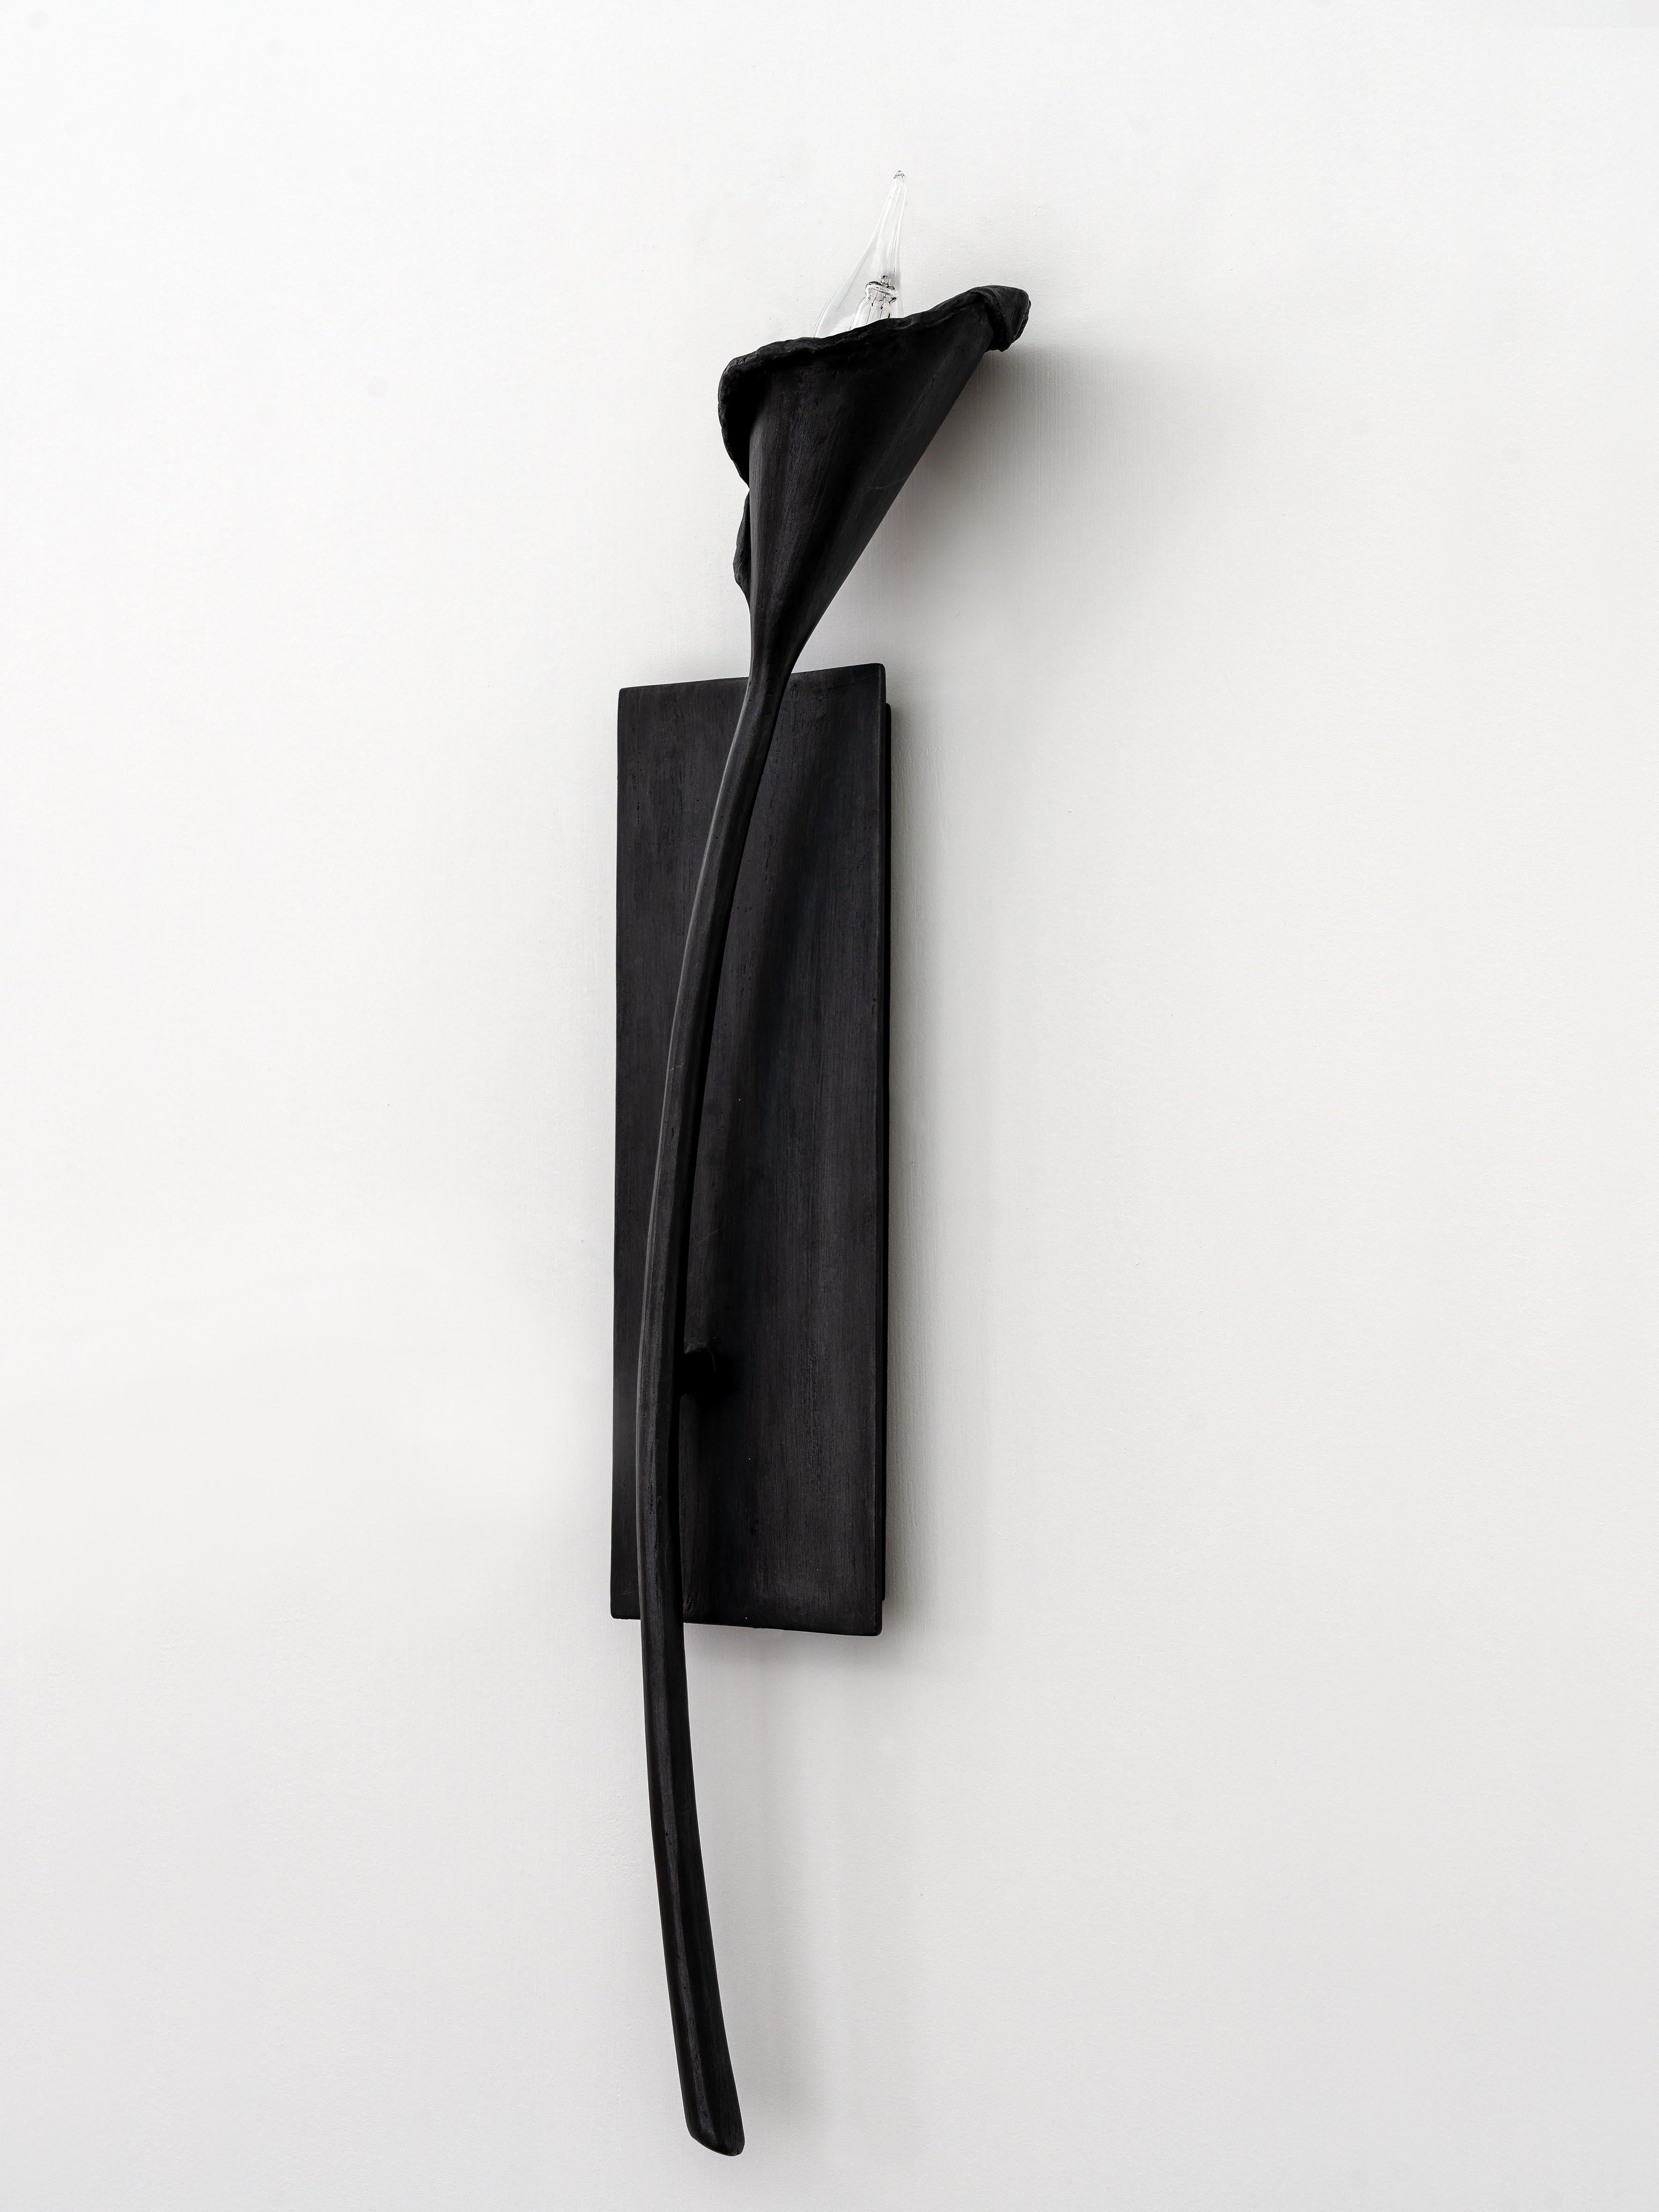 Organic Modern Calla Lily Contemporary Wall Light in Black Plaster,  right version, Benediko For Sale